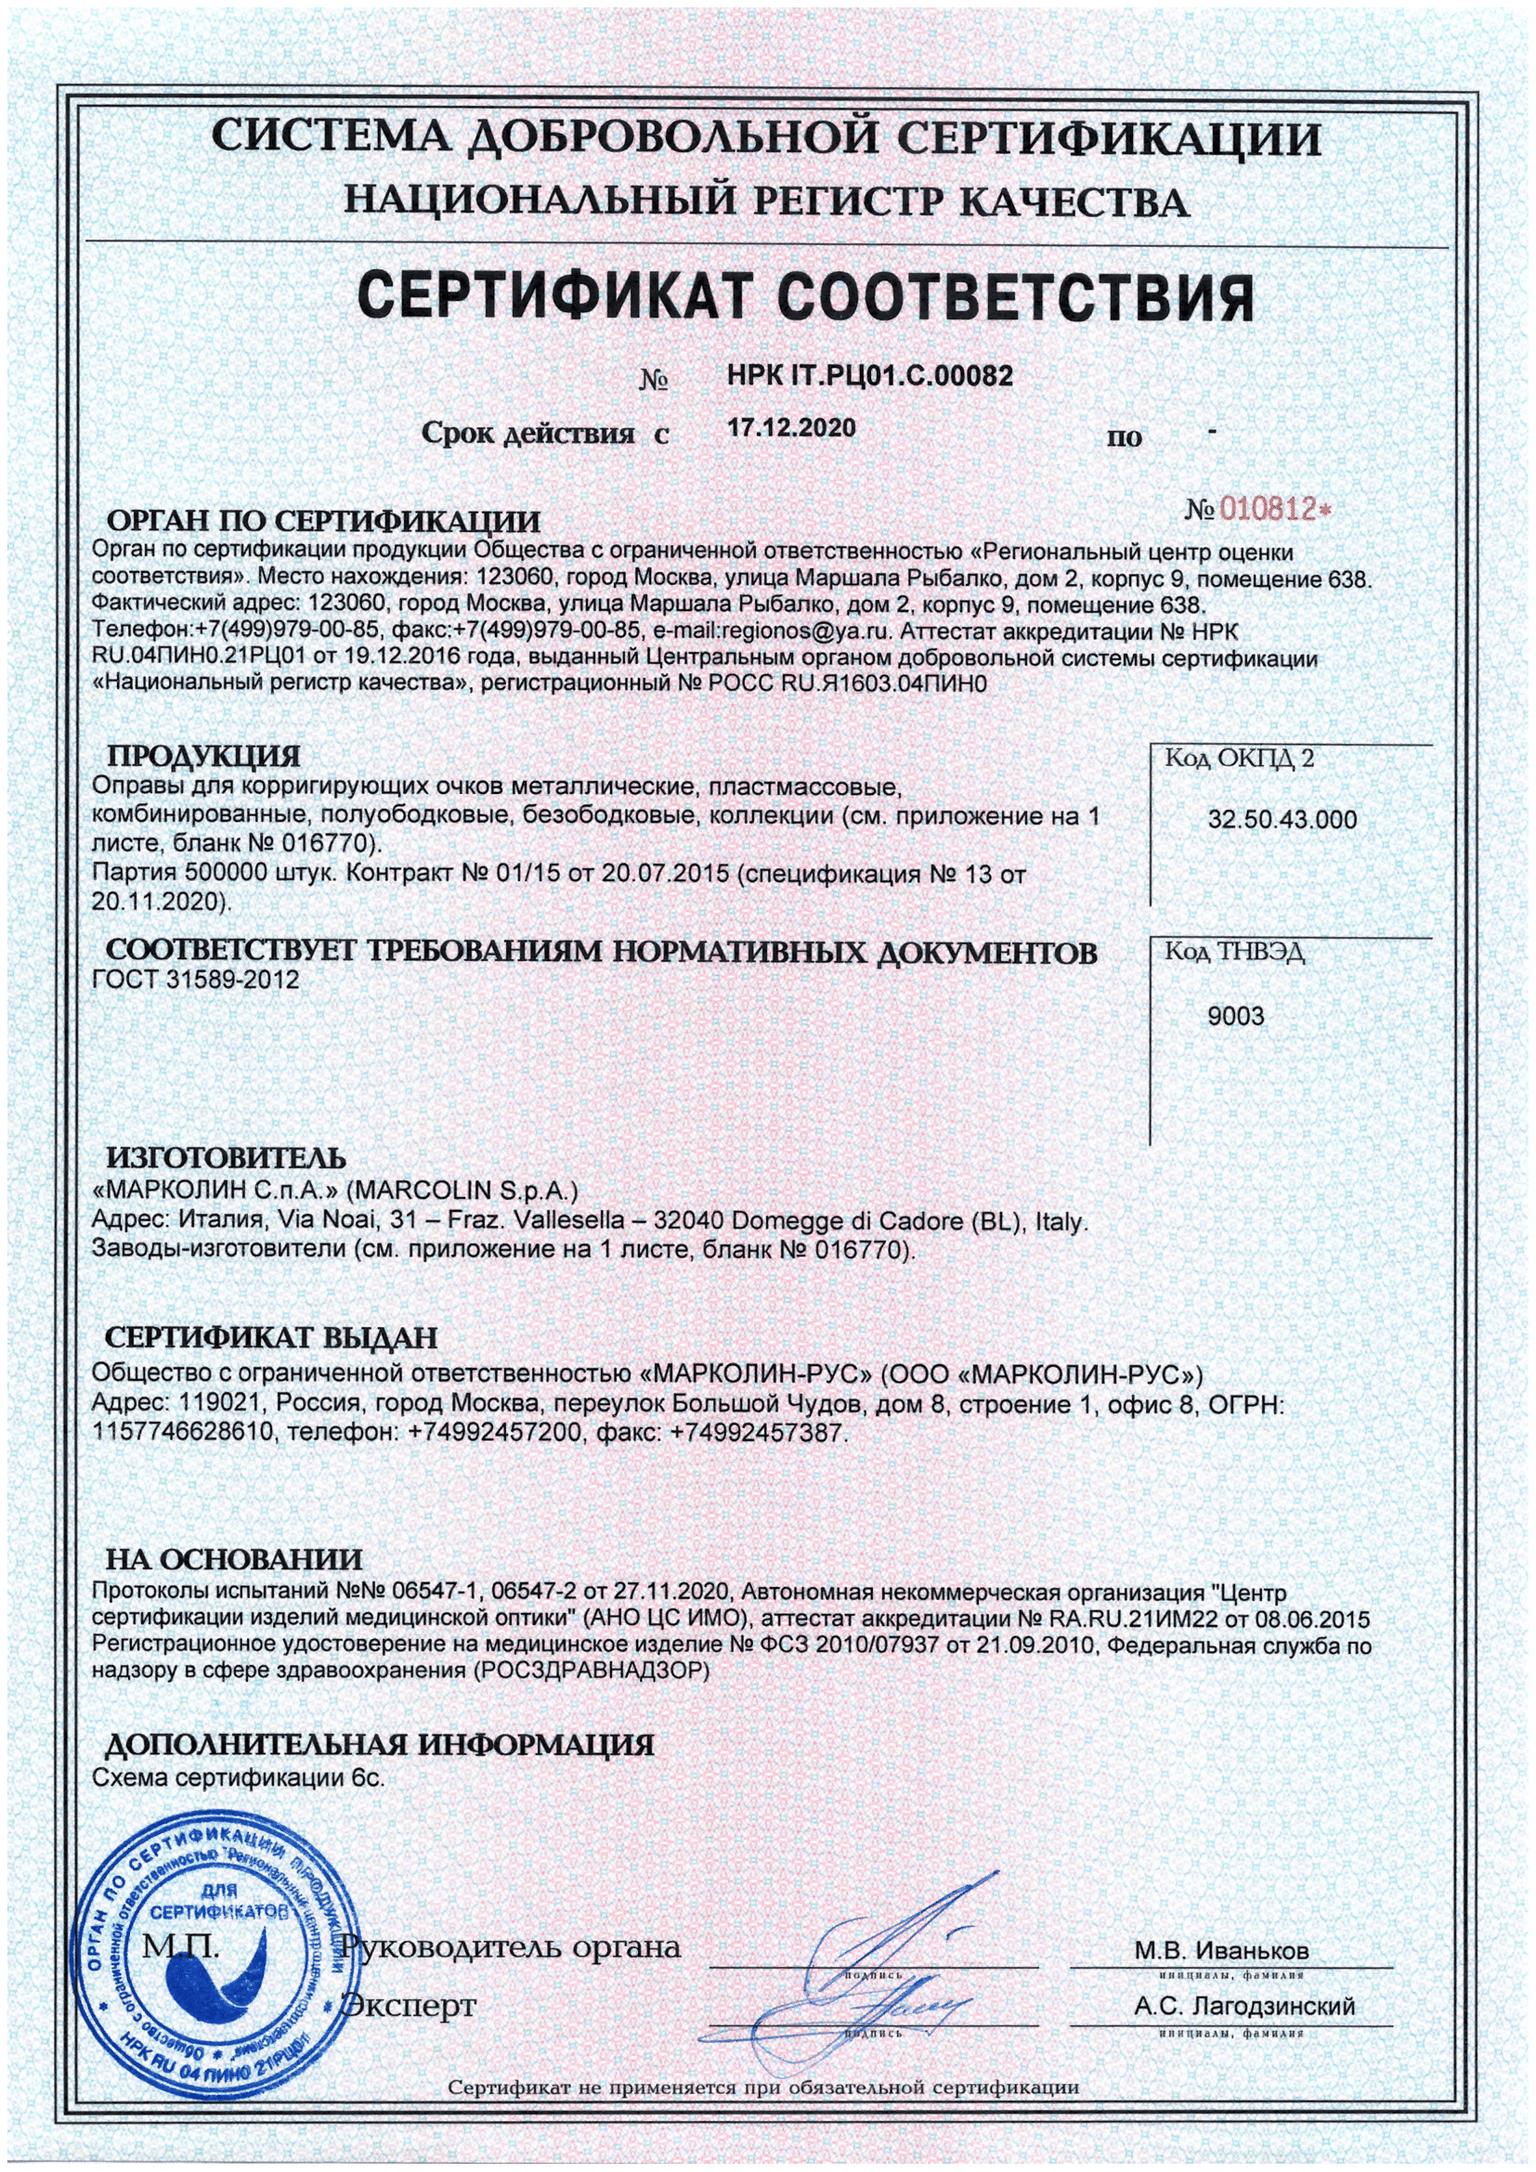 /images/certificates/sertificate1-4.png